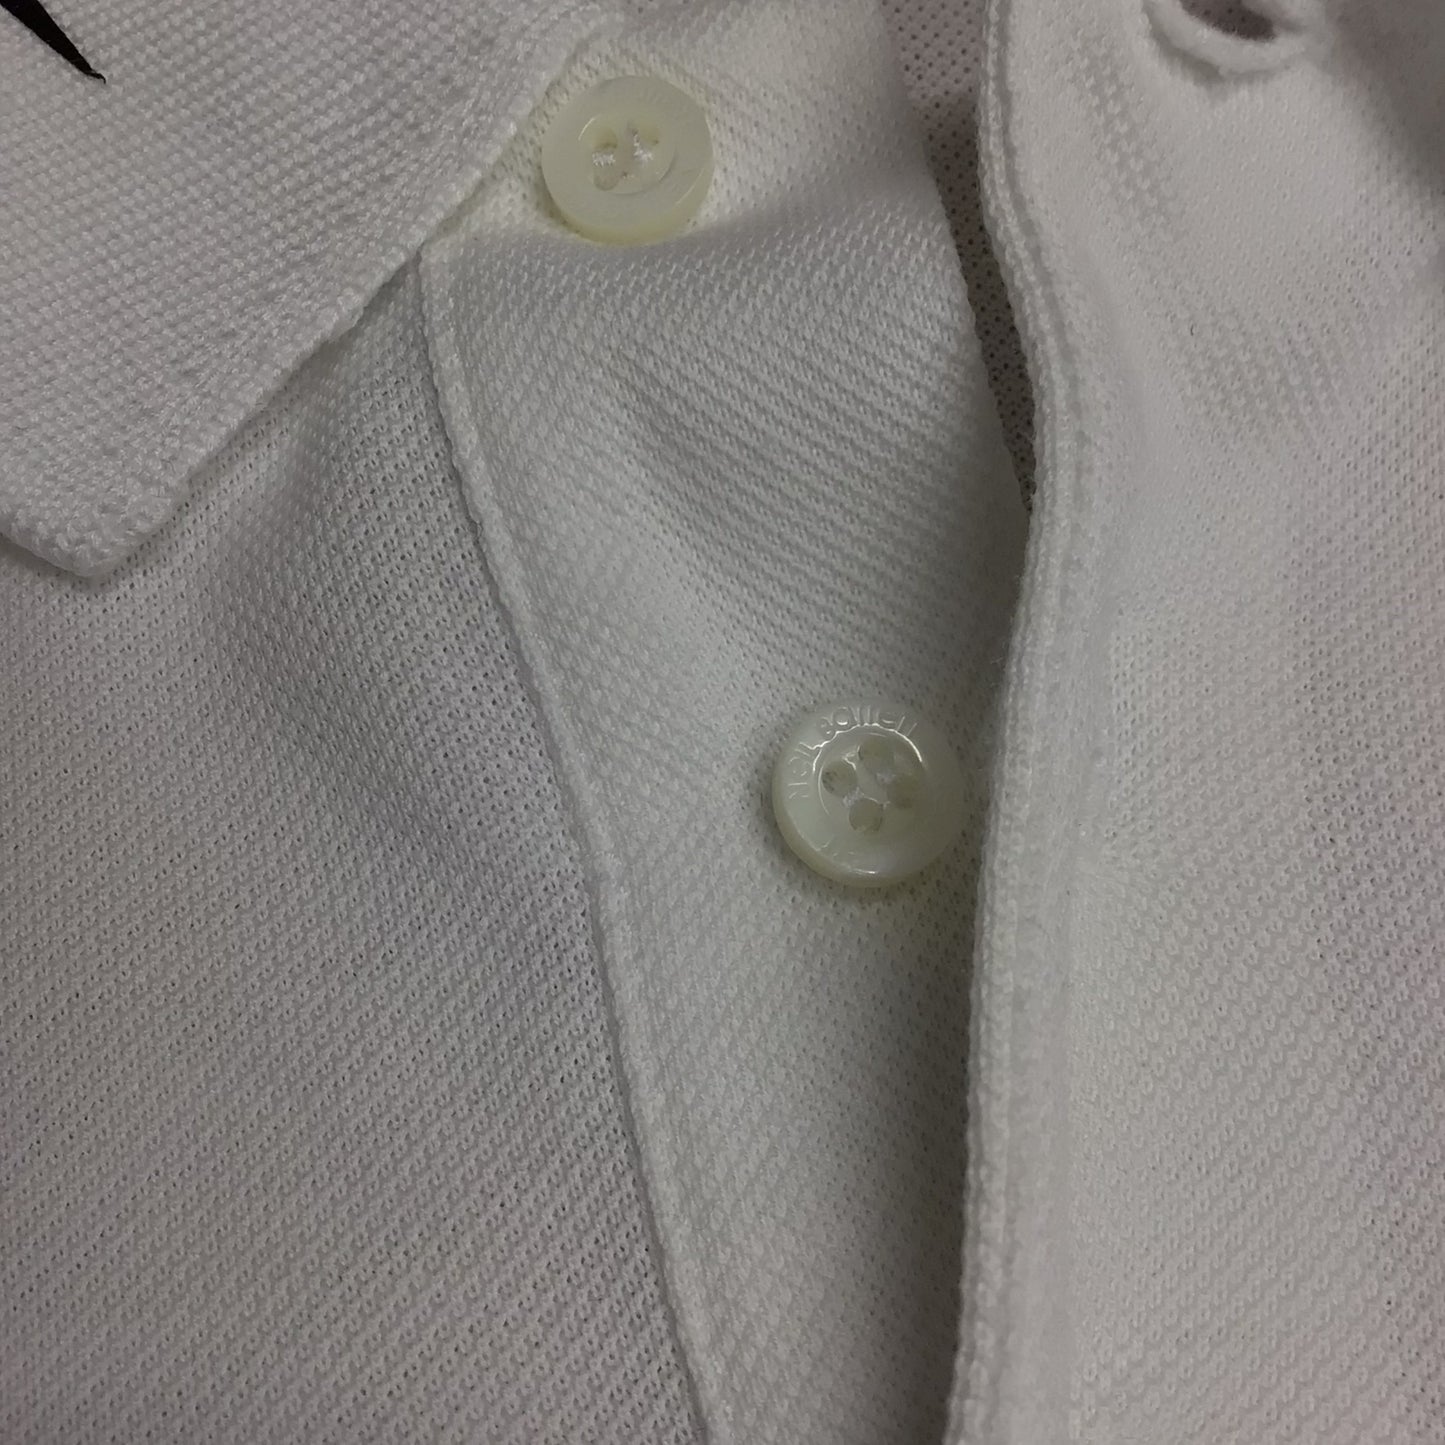 Neil Barrett White Polo Shirt Regular Length Slim Fit 100% Cotton Size L